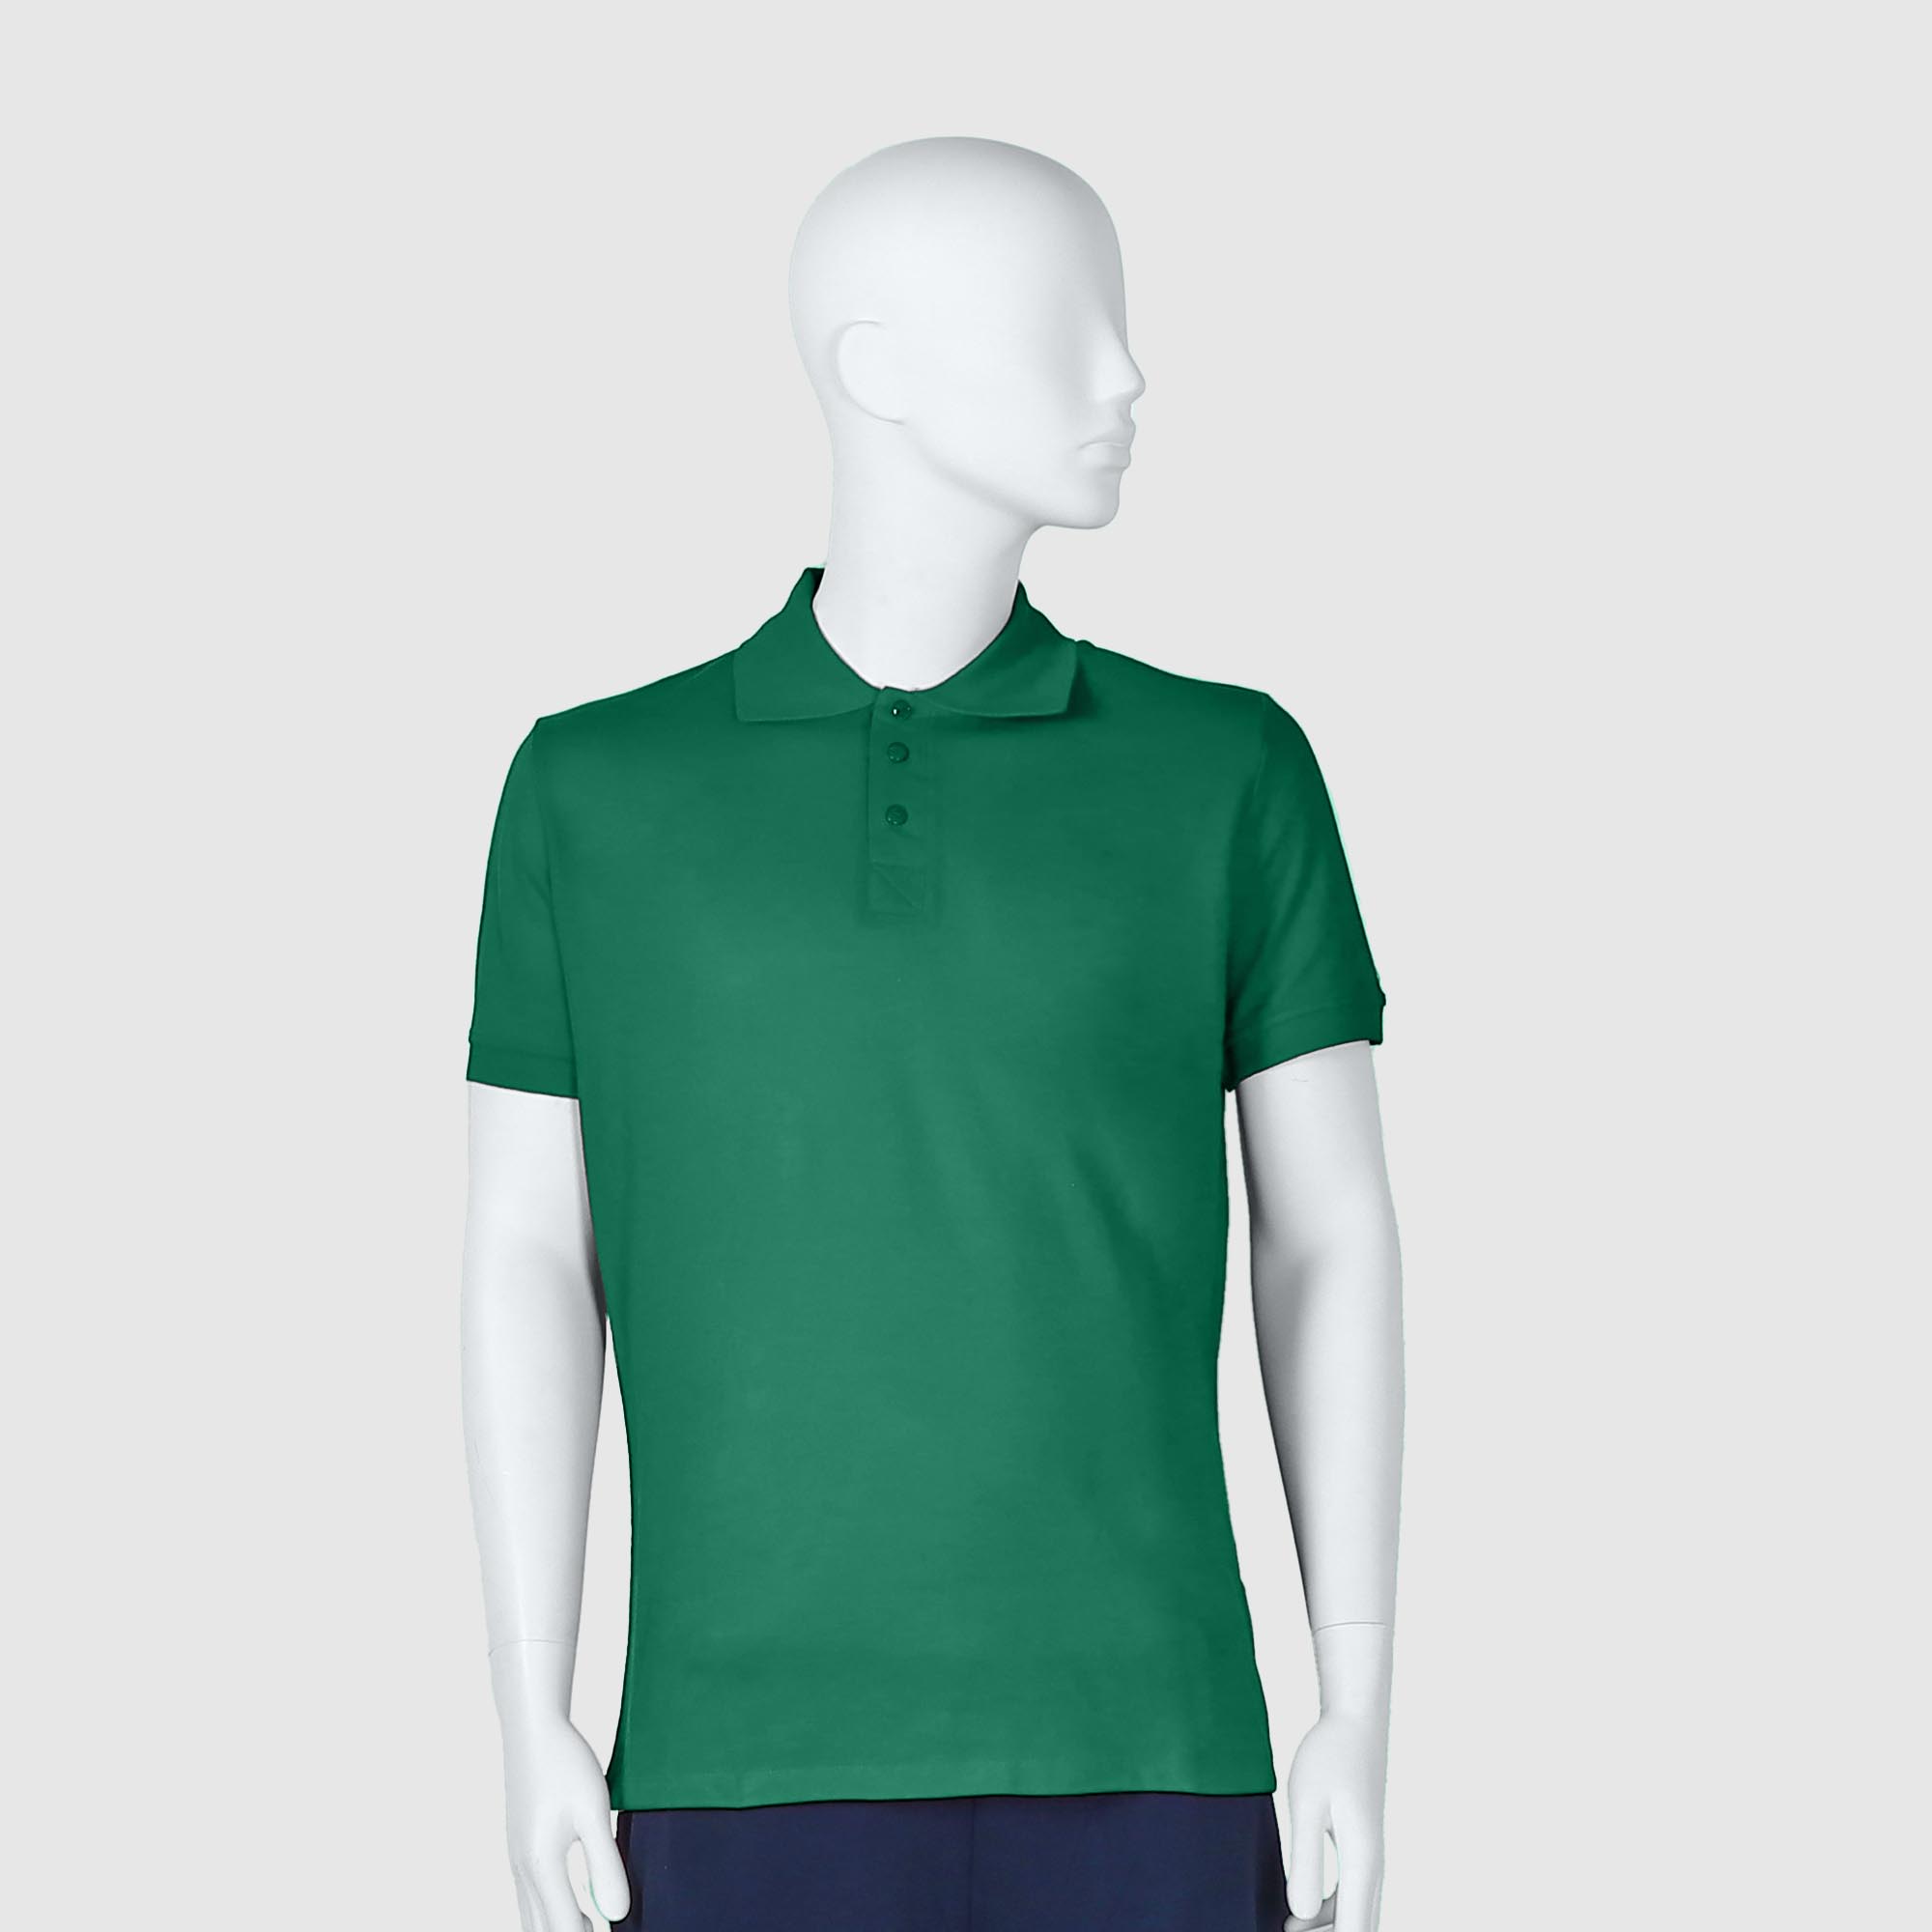 Мужская футболка-поло Diva Teks зелёная (DTD-09), цвет зелёный, размер 50-52 - фото 1